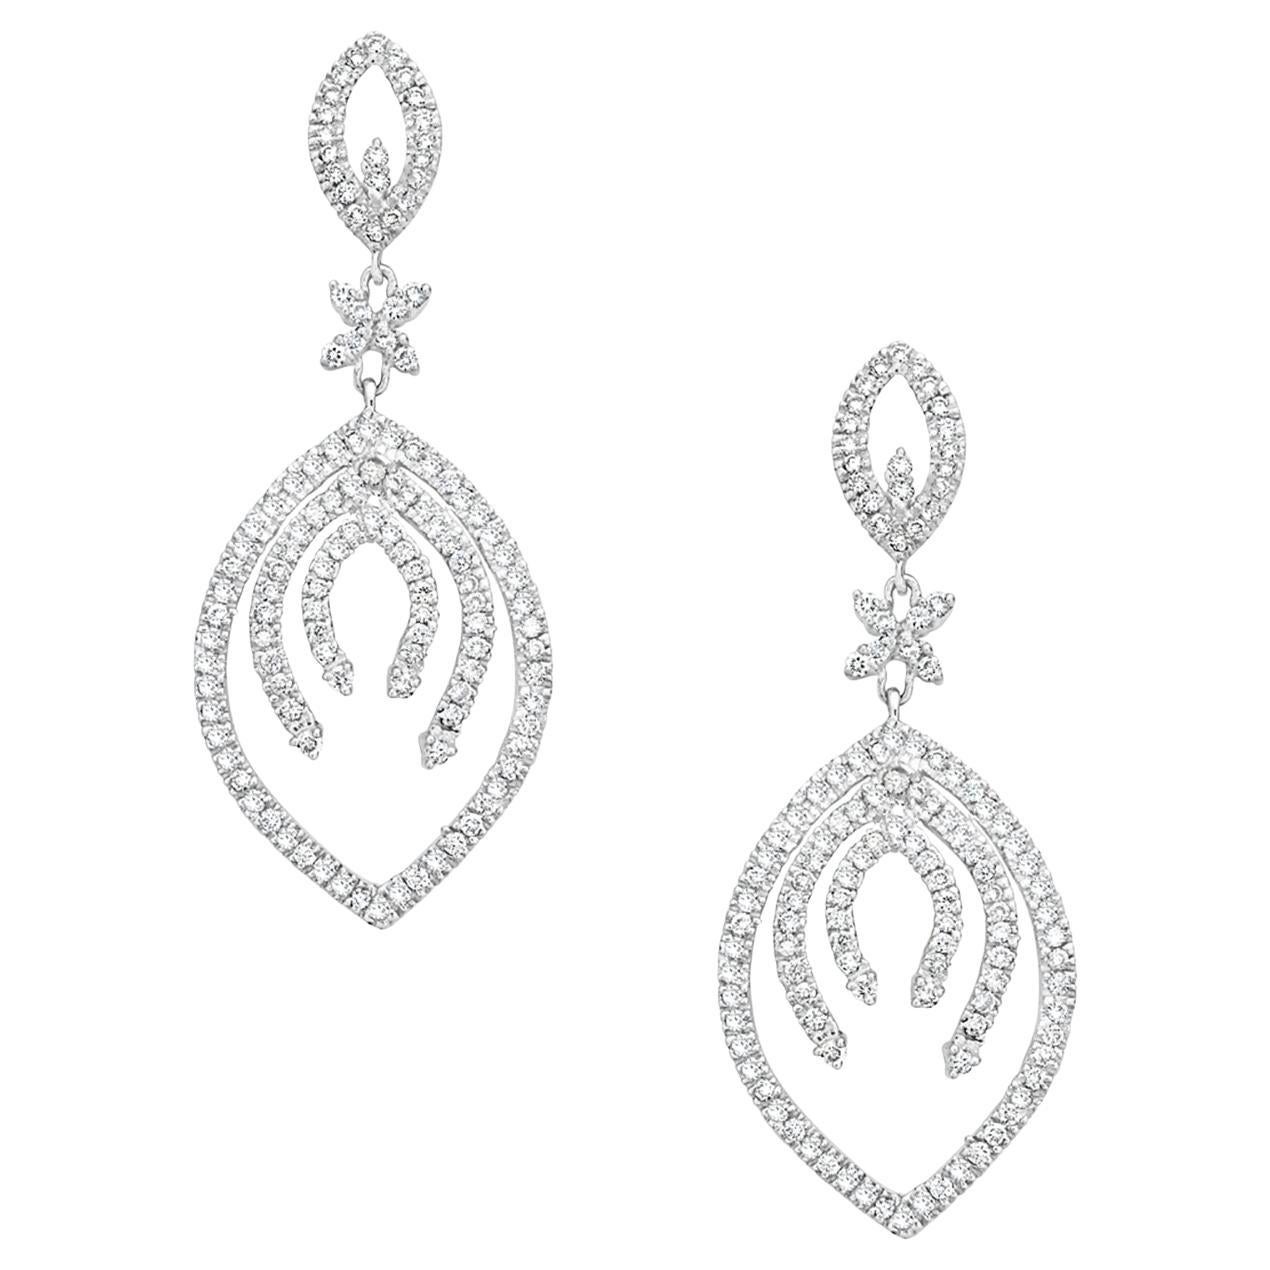 Teardrop Shaped Dangle Earring with Brilliant Cut Diamonds in 18k White Gold For Sale